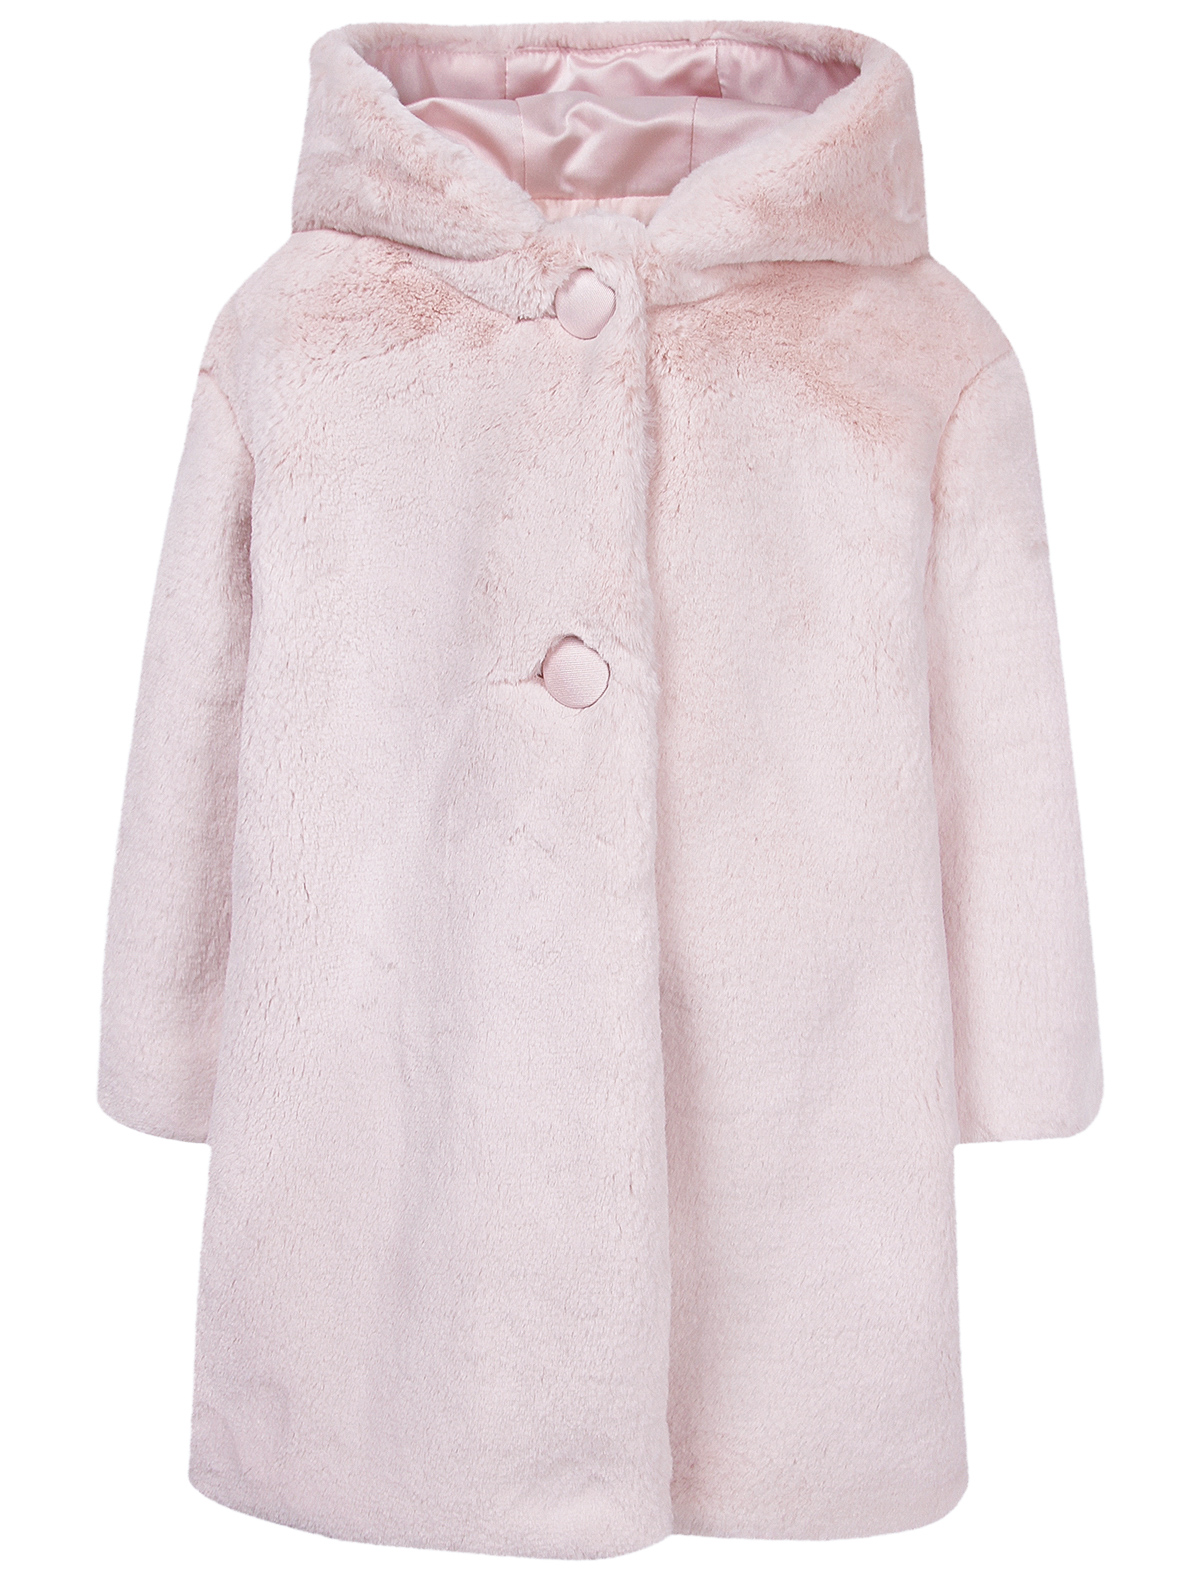 Пальто меховое Colorichiari 2045175, цвет розовый, размер 9